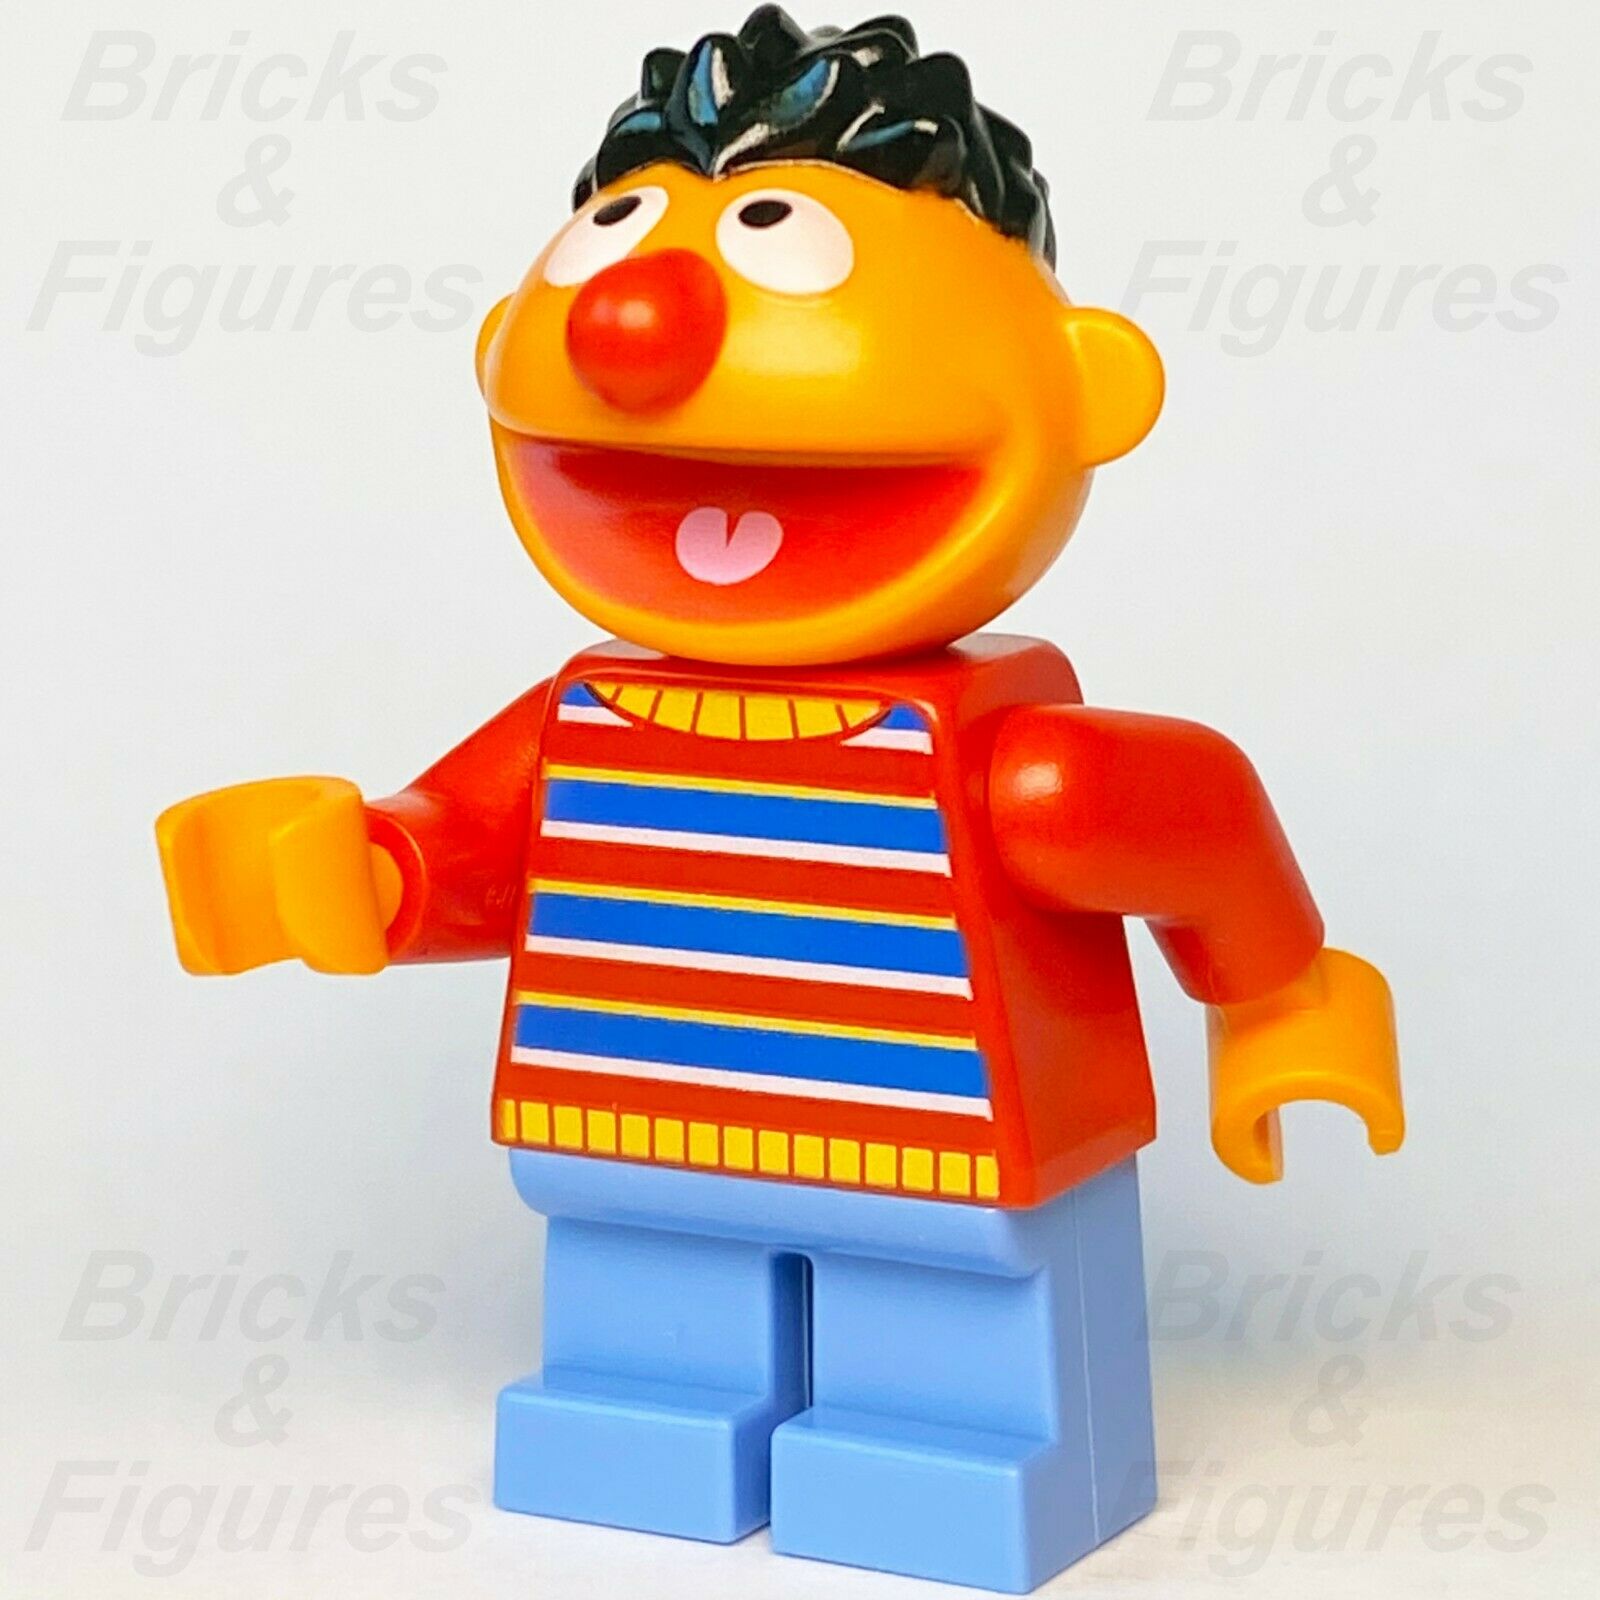 New Ideas LEGO Ernie 123 Sesame Street Minifigure from set 21324 Minifig - Bricks & Figures